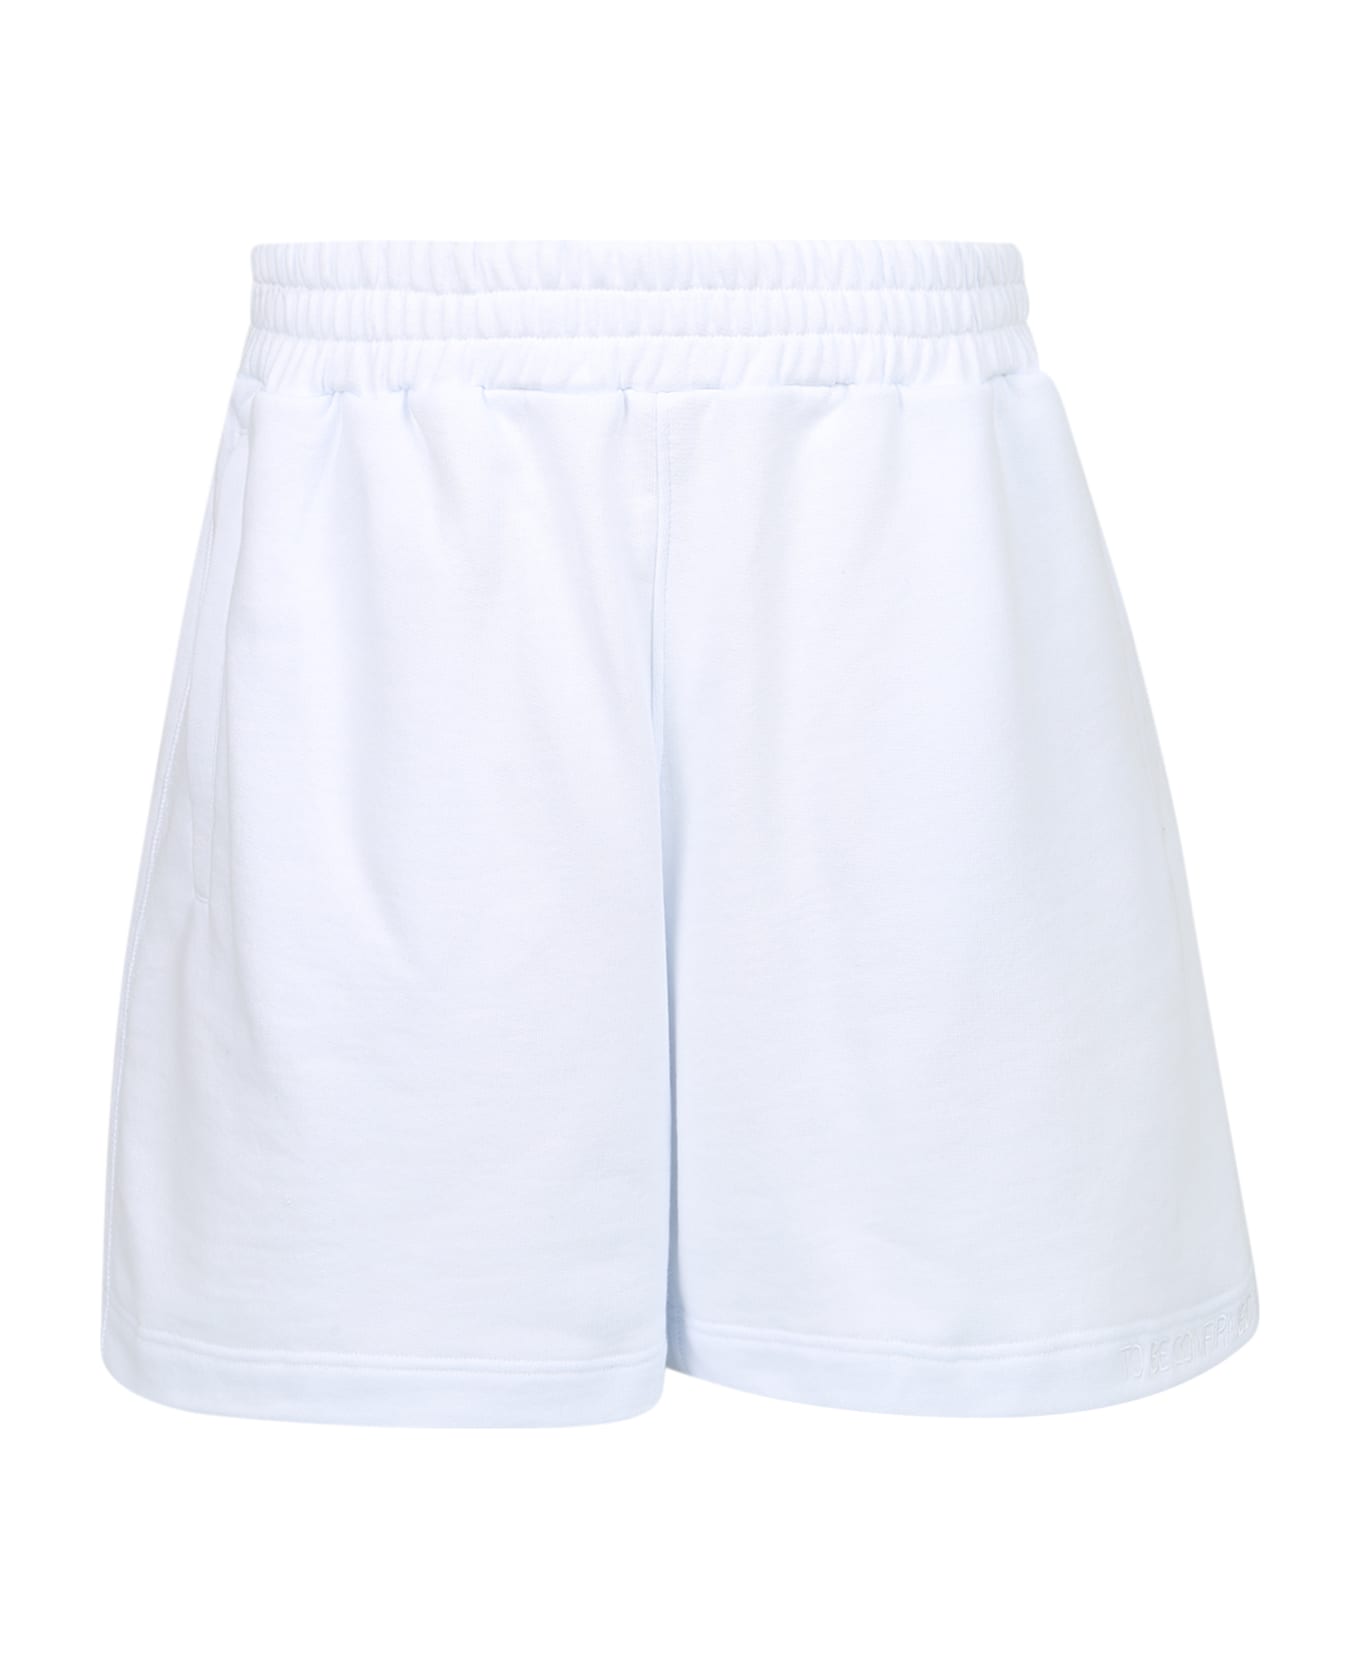 14 Bros Condor Jogger Shorts - White ショートパンツ